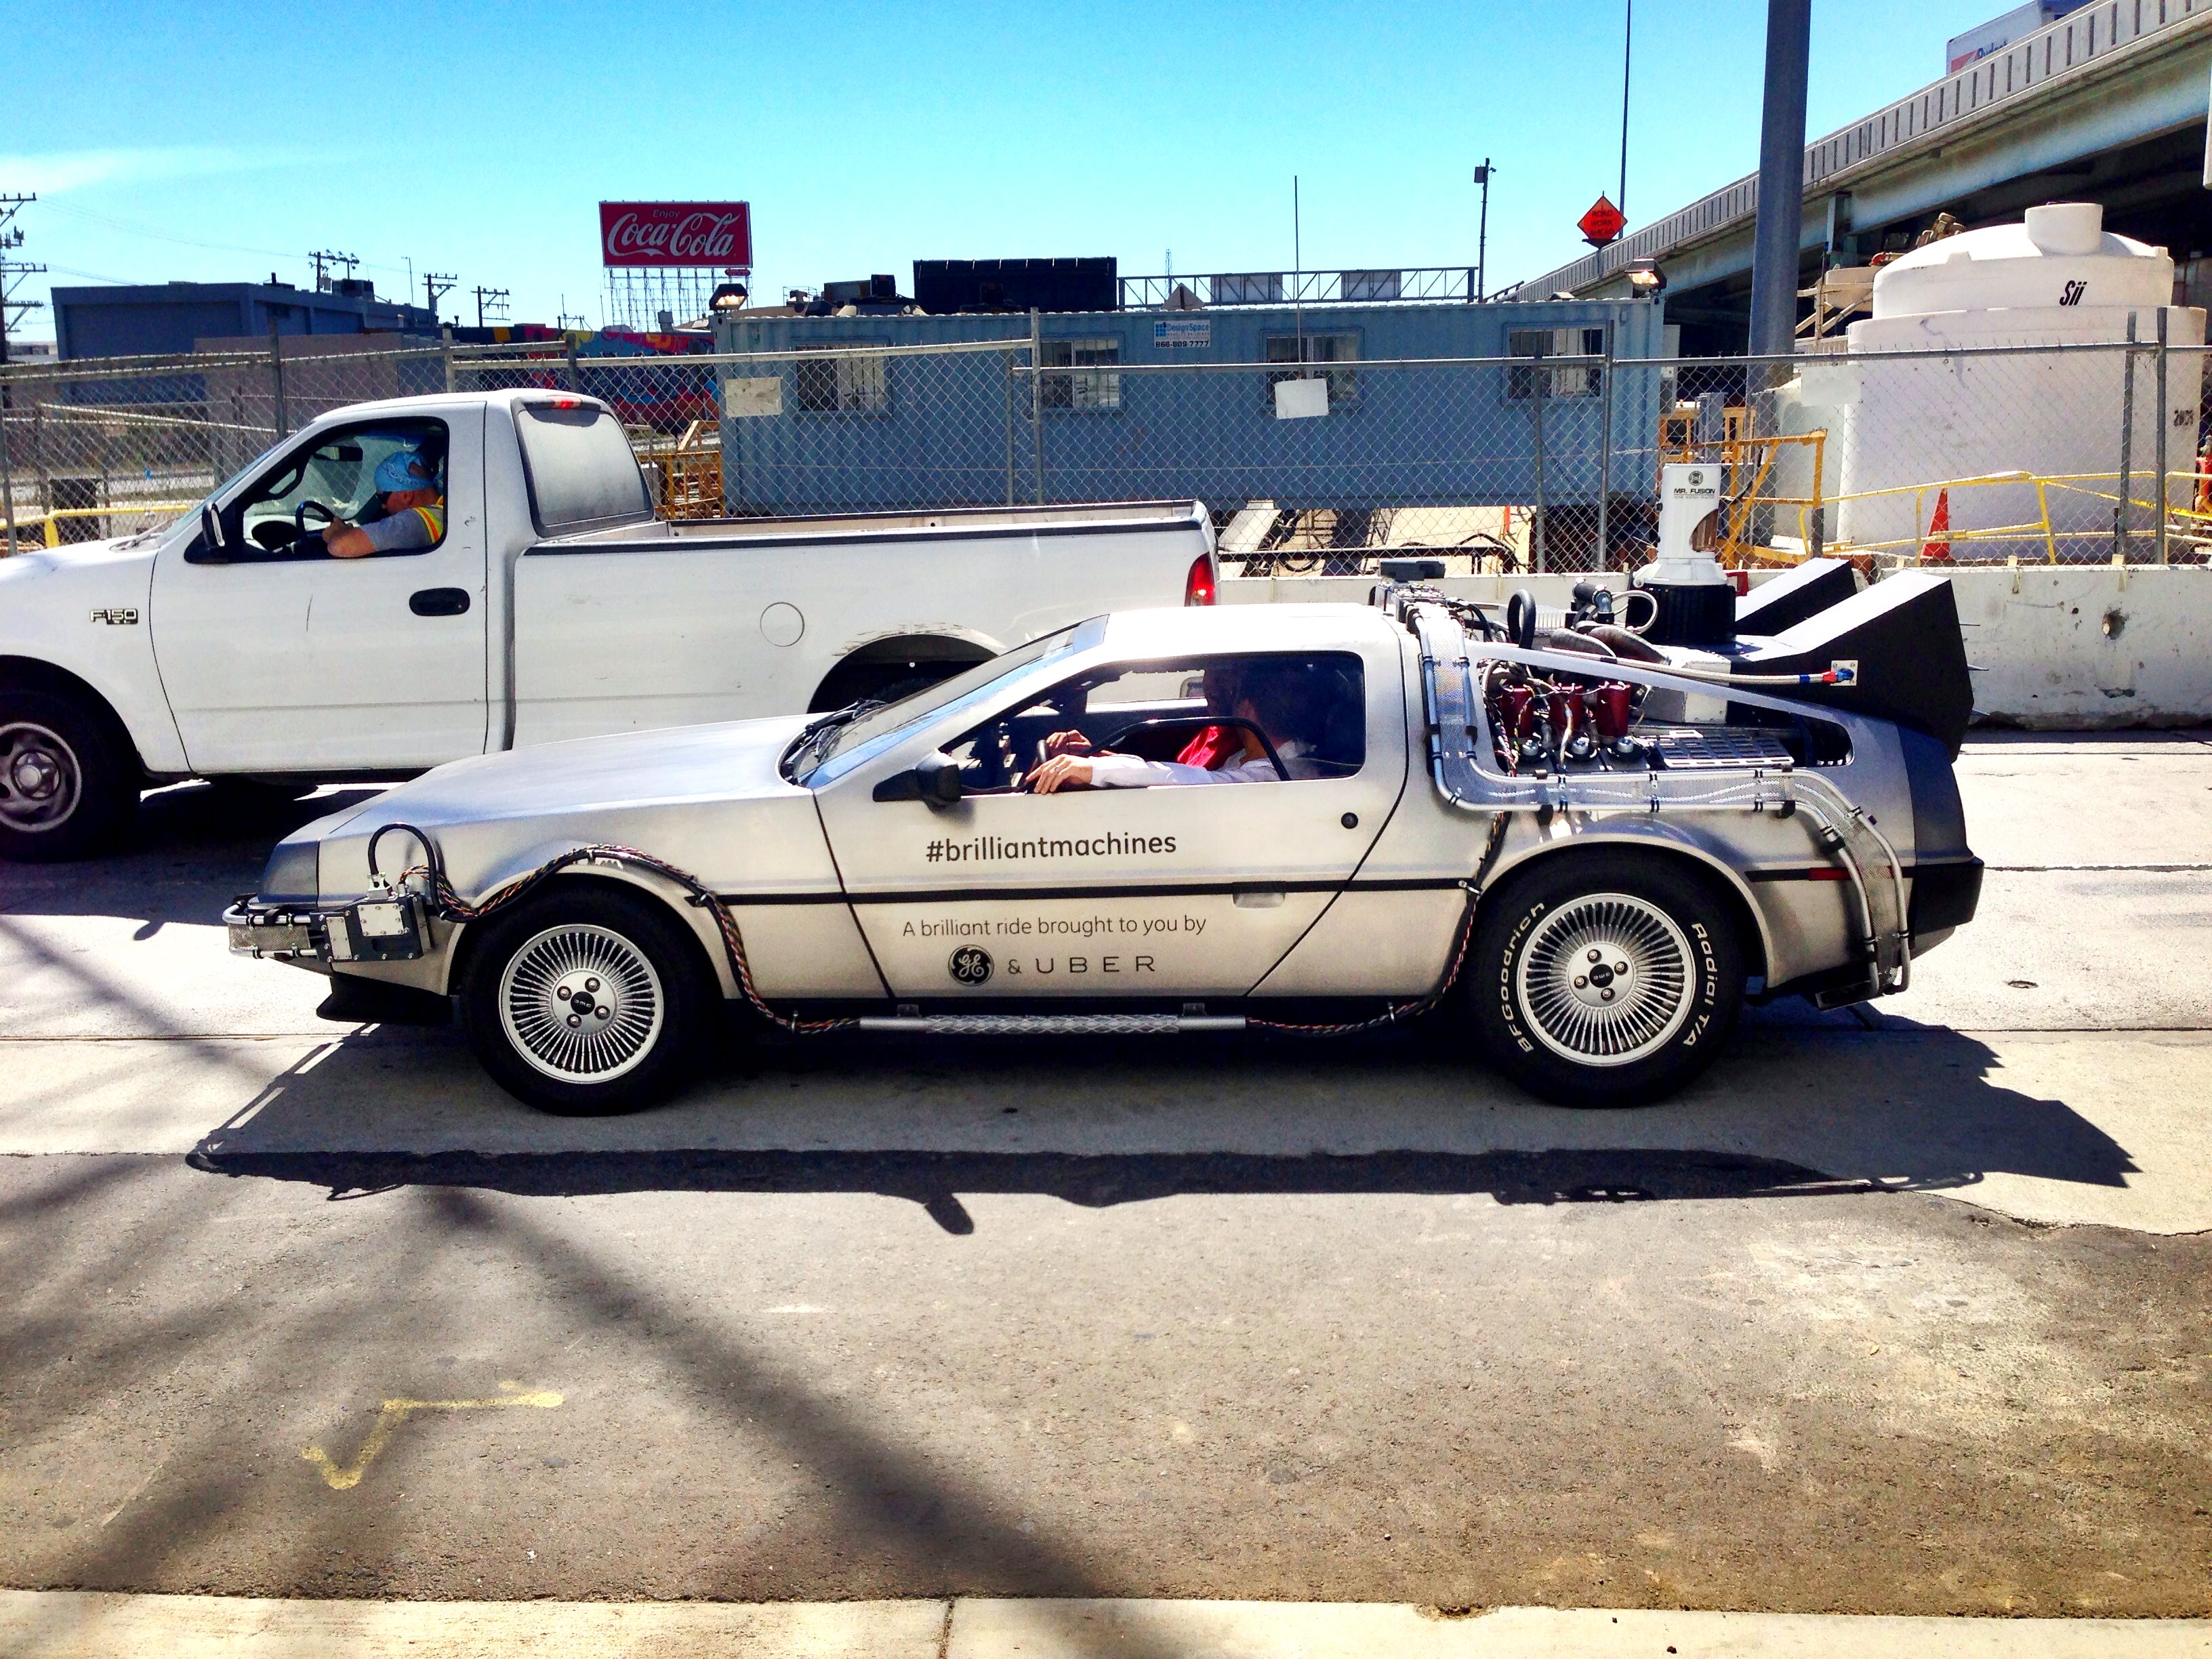 'Uber + G.E., #brilliantmachines' promotion: full-size DeLorean Time Machine replica build, driving in downtown San Francisco.